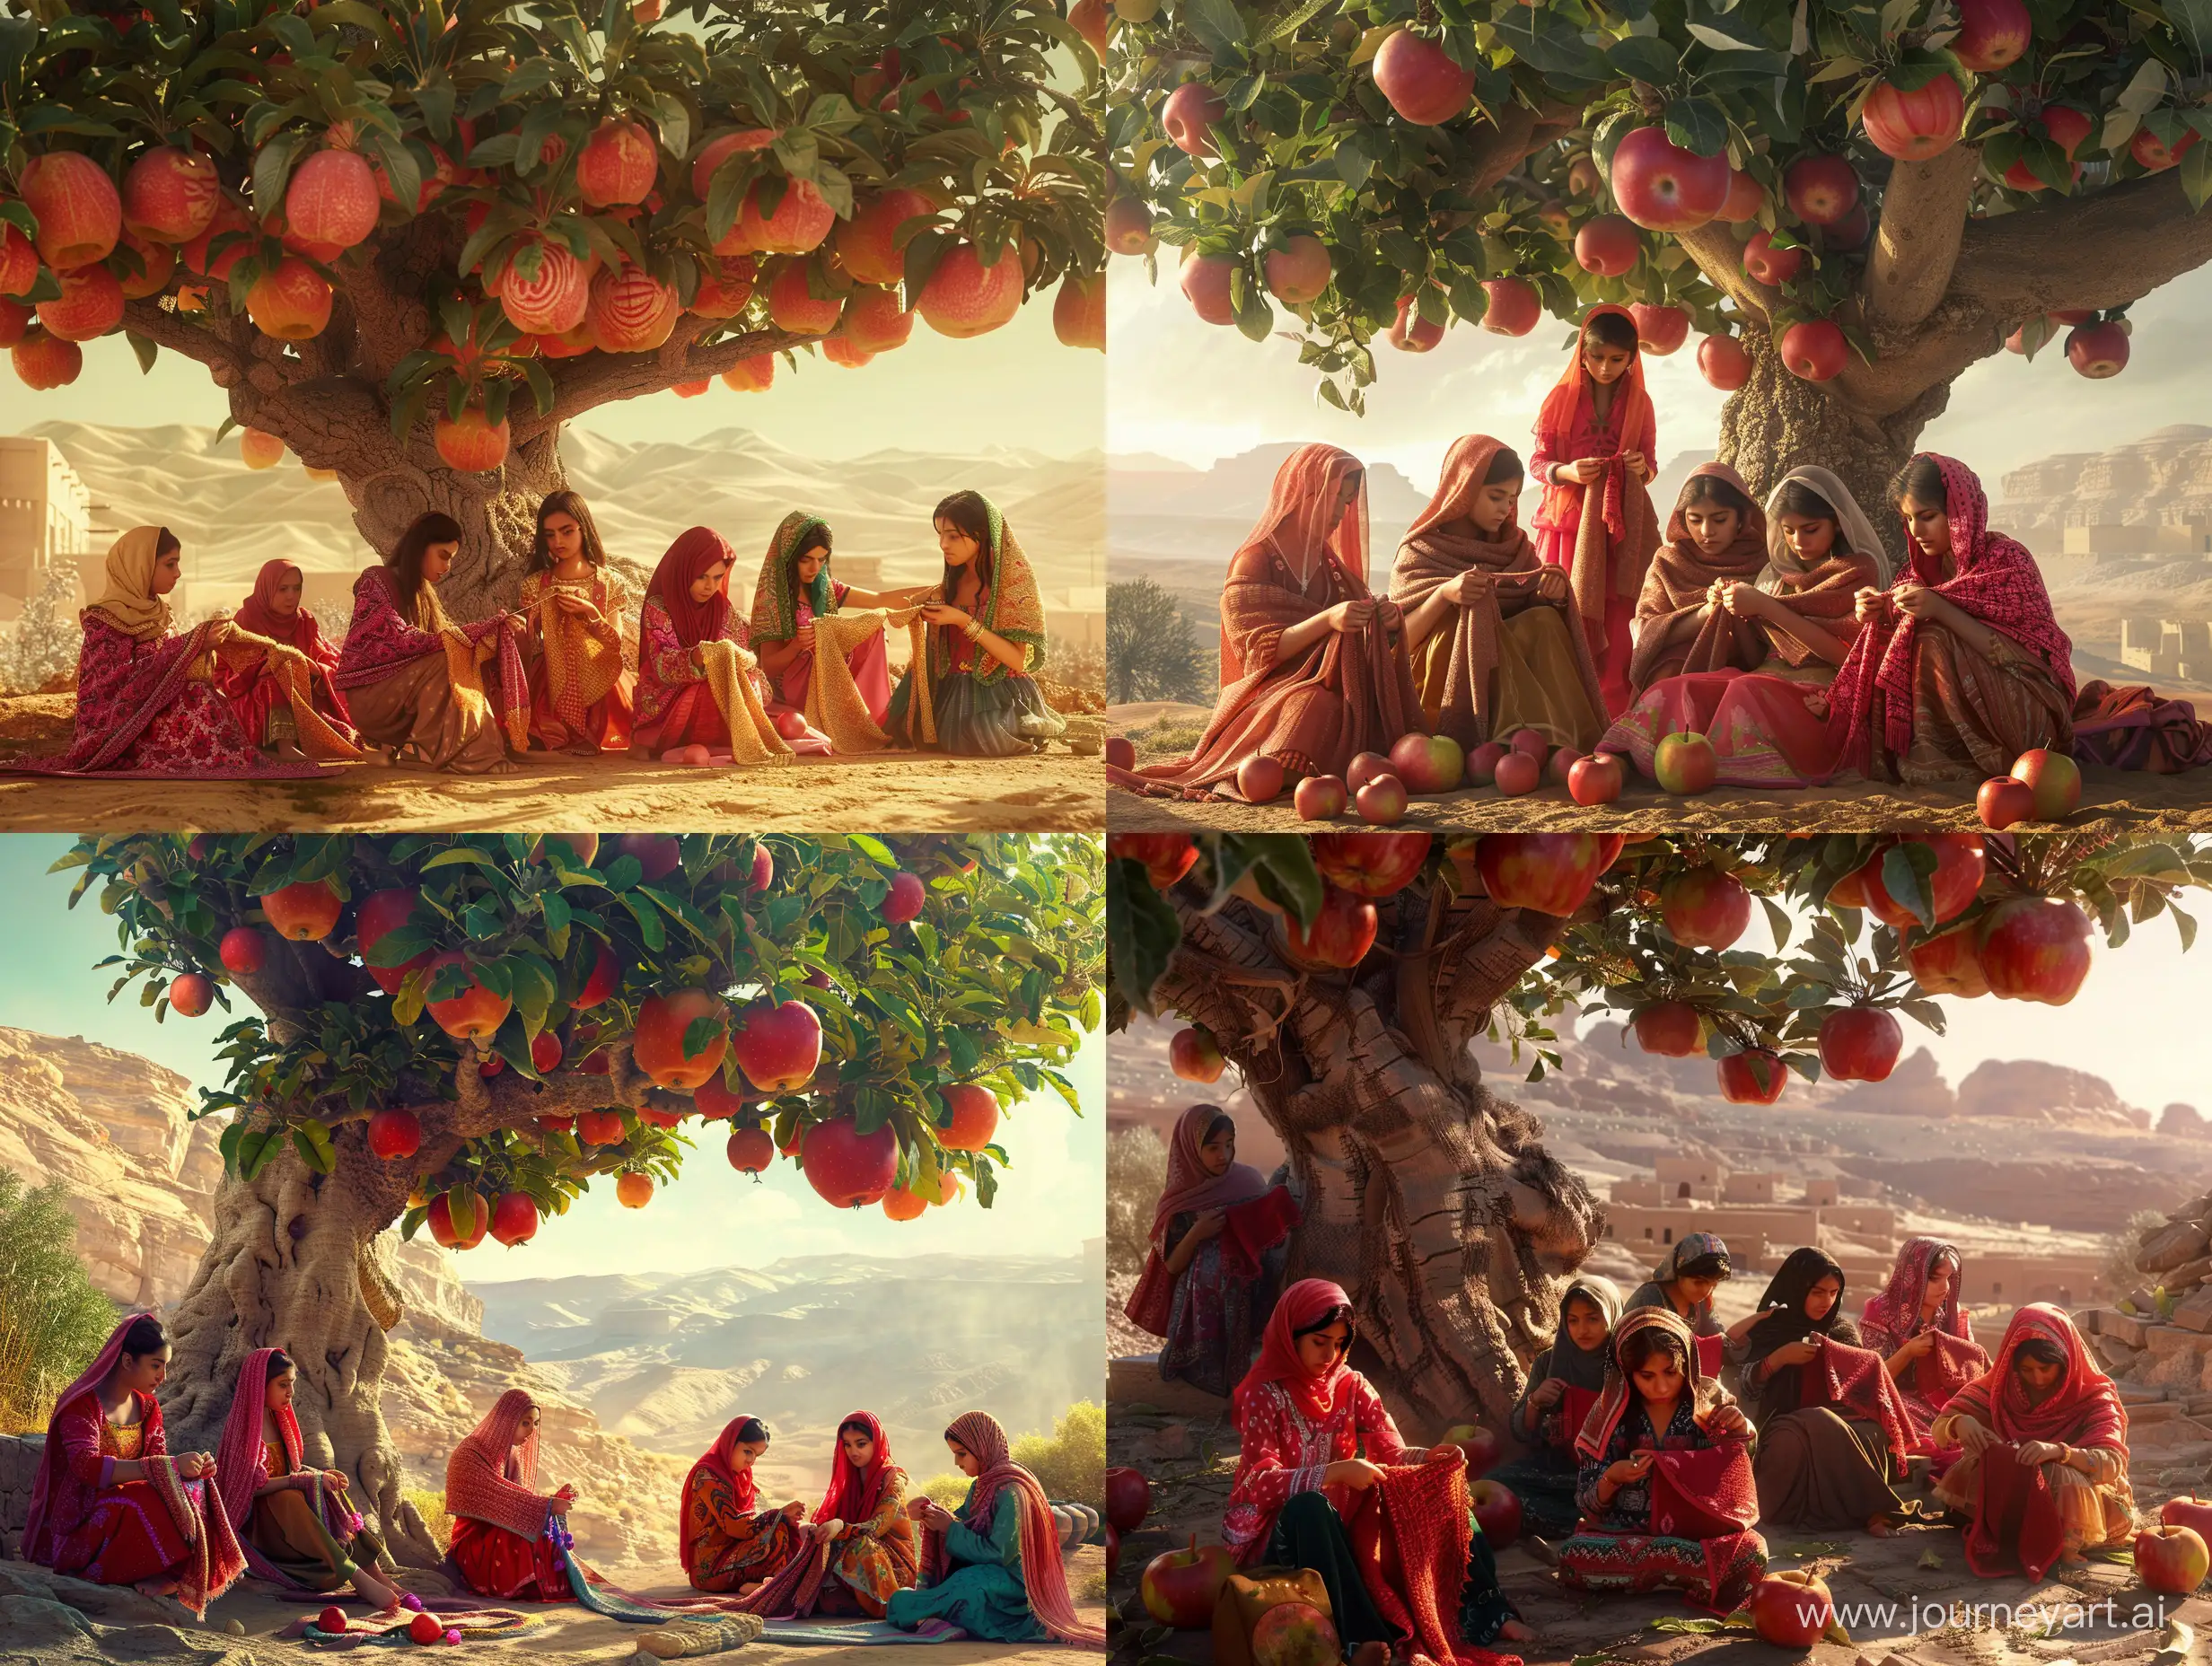 Persian-Women-Knitting-Shawls-under-Giant-Apple-Tree-in-Ancient-Desert-Civilization